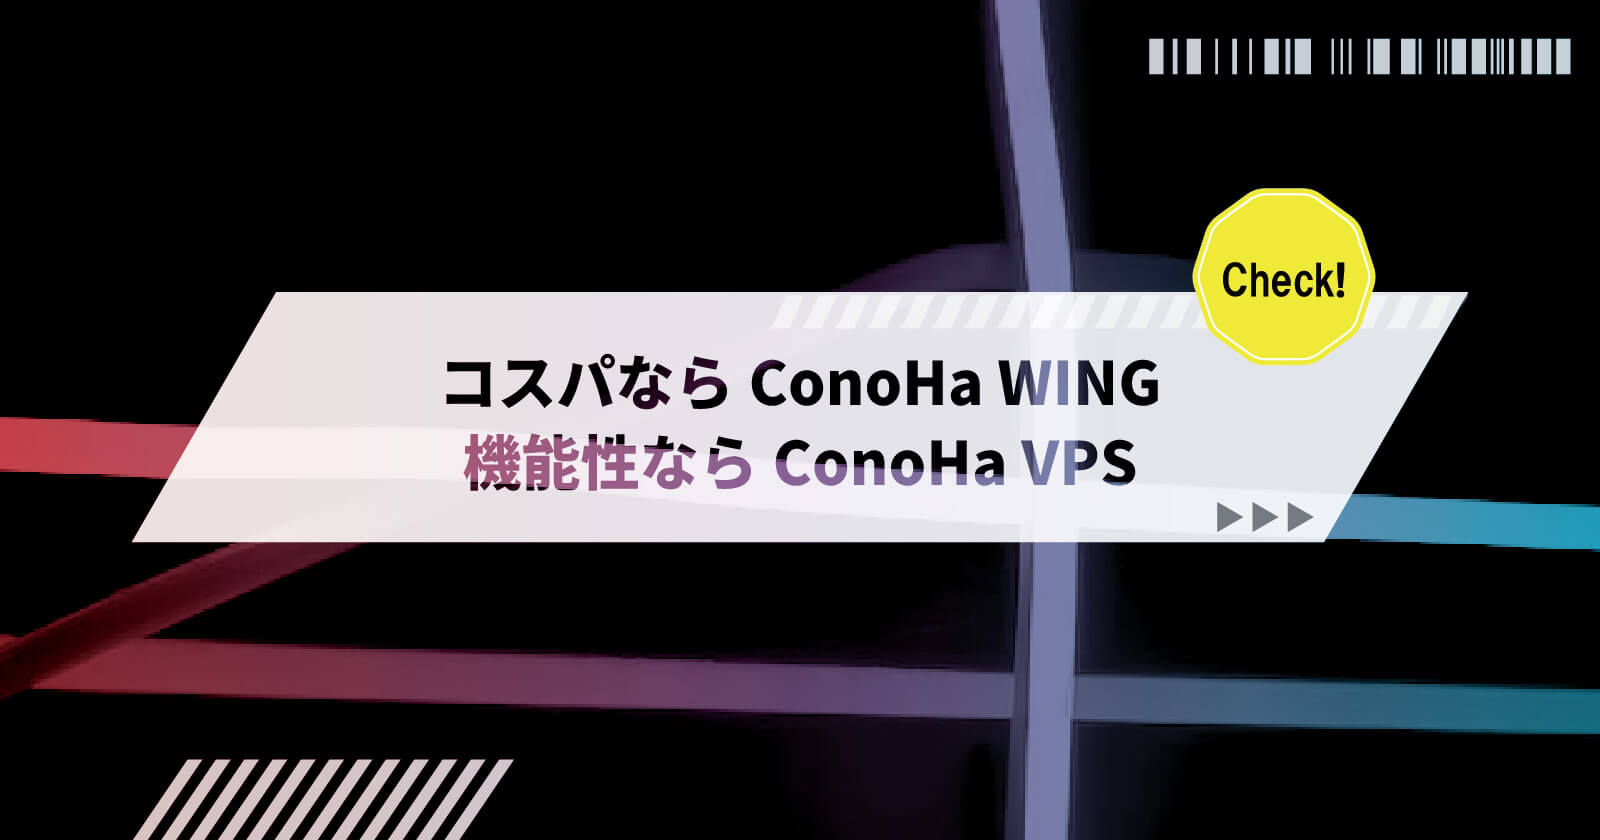 ConoHa WINGとConoHa VPSの違いはサーバー性能と料金！どっちがおすすめか解説